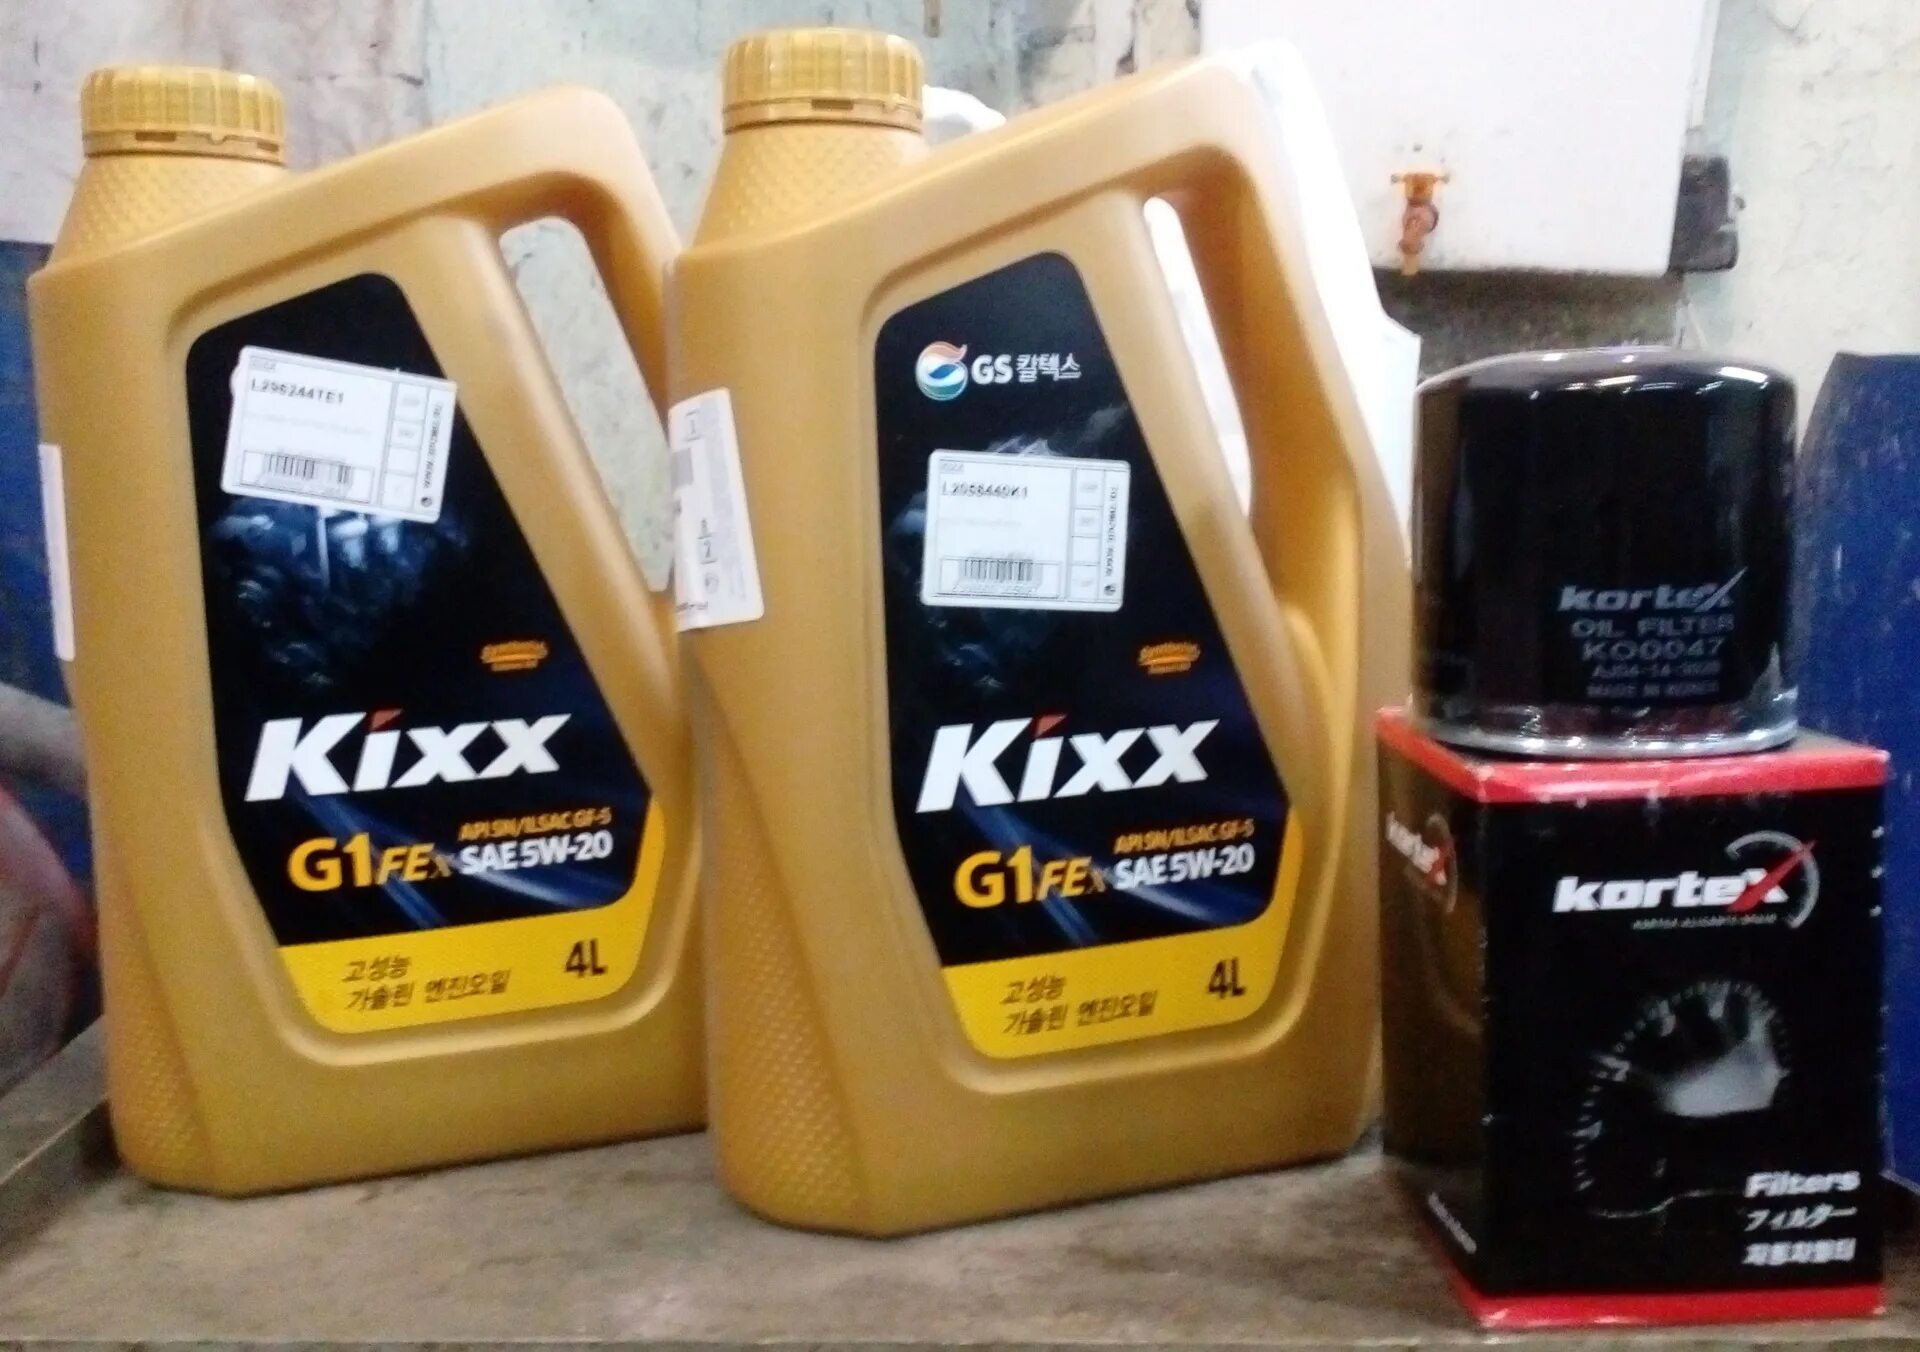 Лучшие корейские масла. Kixx Oil 5w20. L2058440k1. Gt Oil 5w20. L2058440e1.